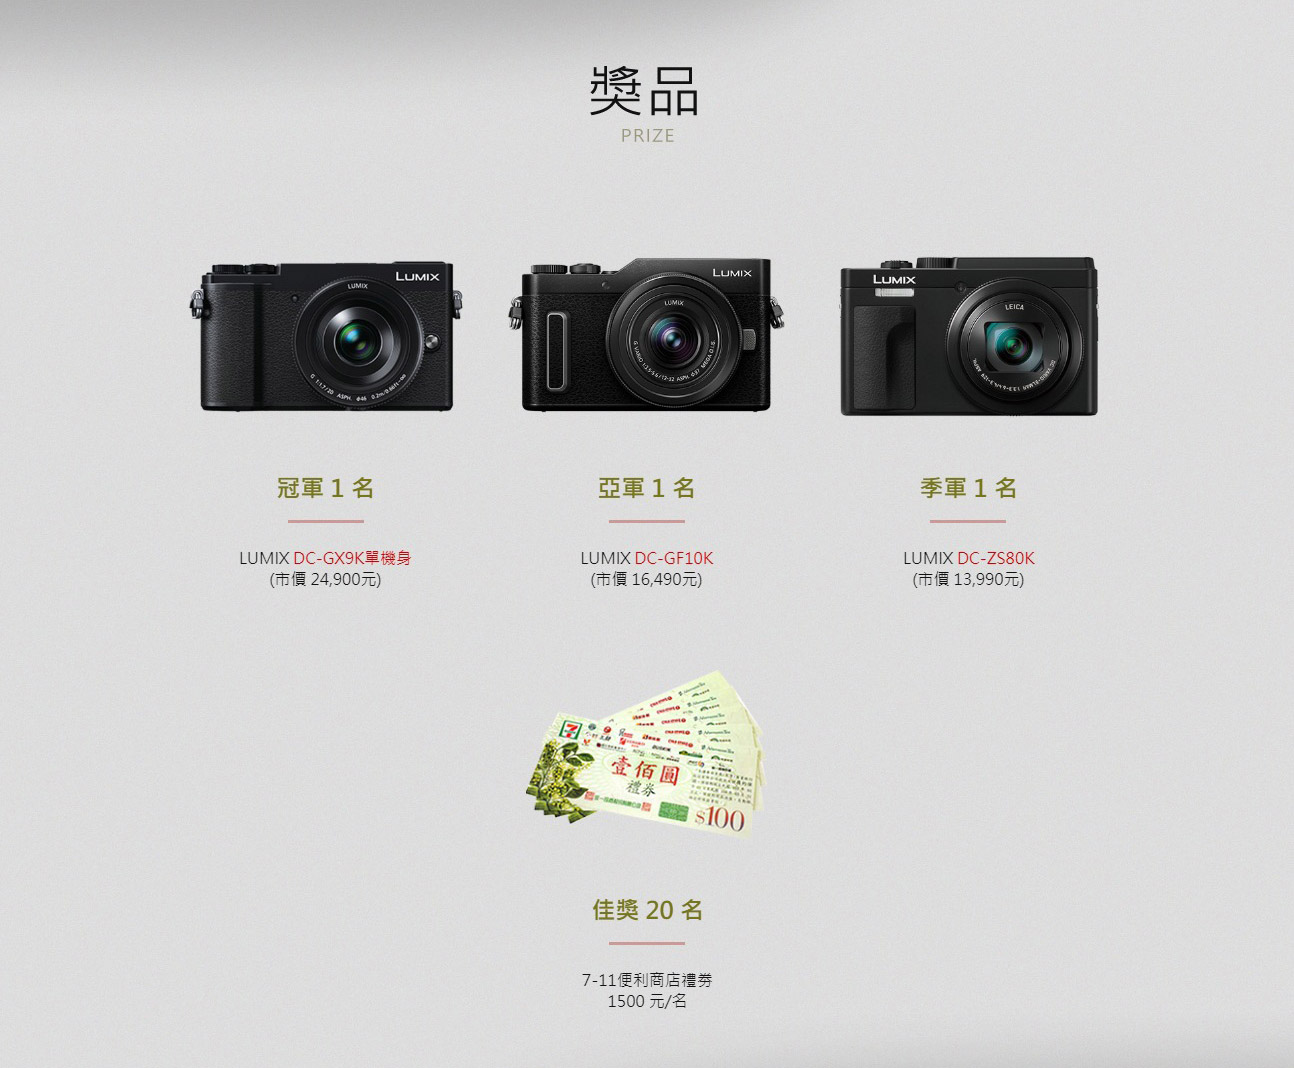 2019 LUMIX Taiwan 攝影比賽 獎項說明